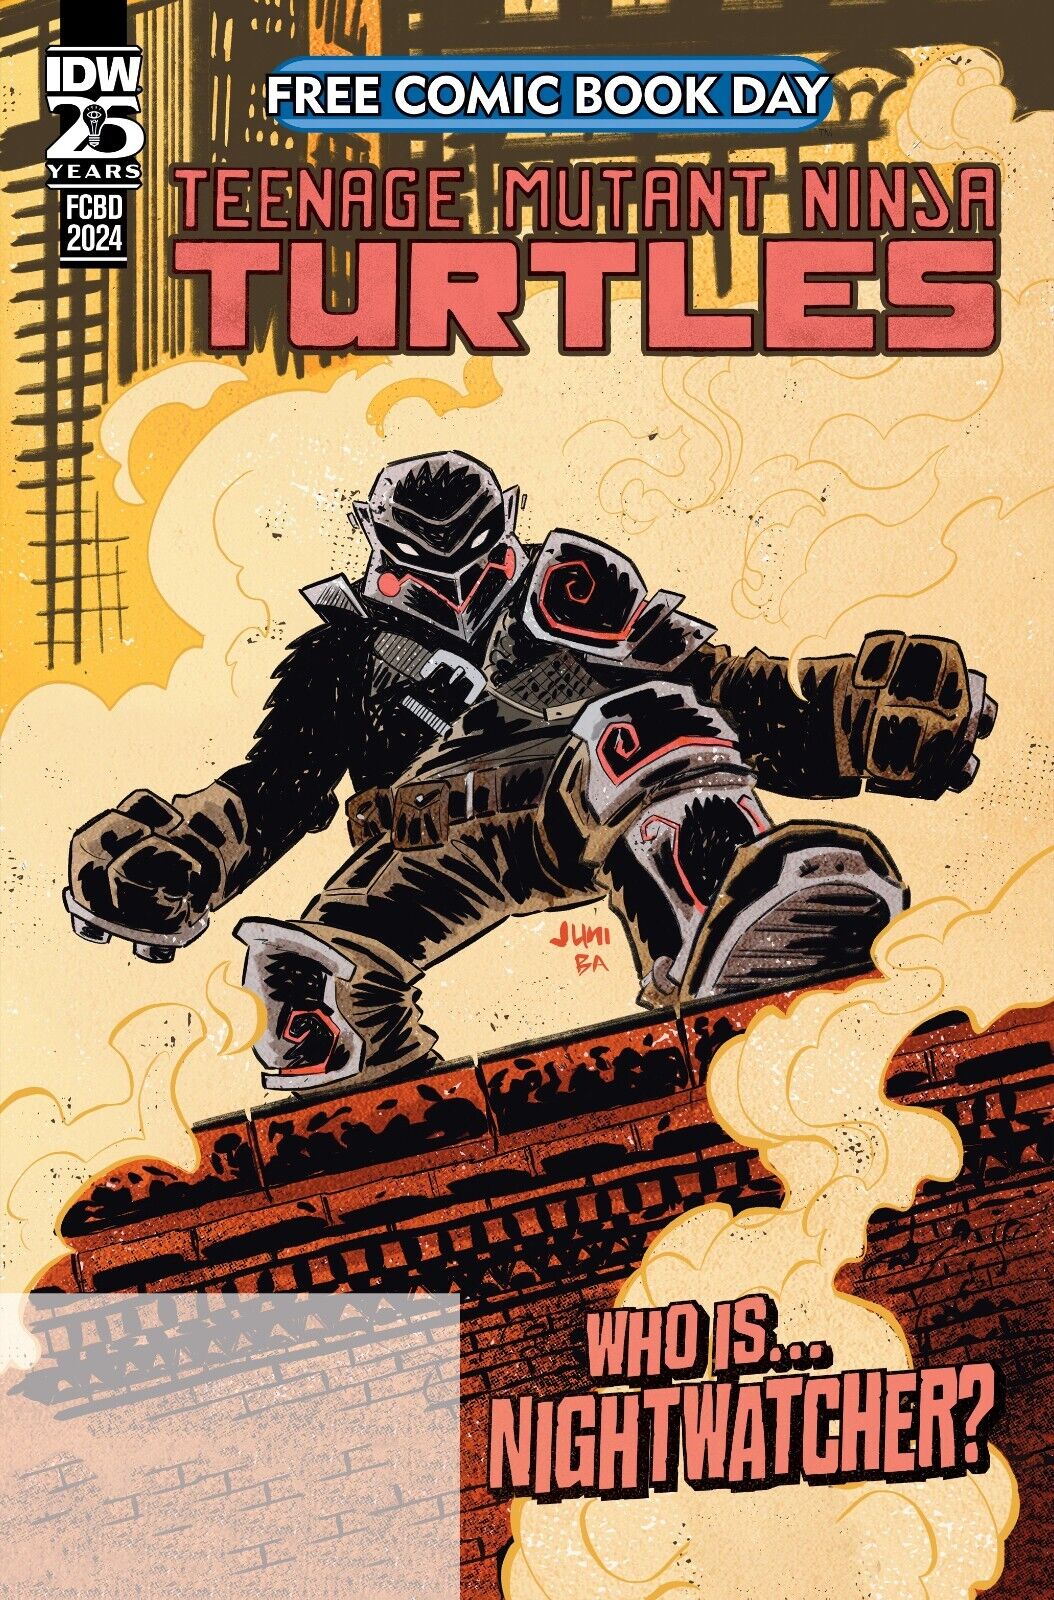 FREE COMIC BOOK DAY 2024: Teenage Mutant Ninja Turtles #1 * IDW * FCBD